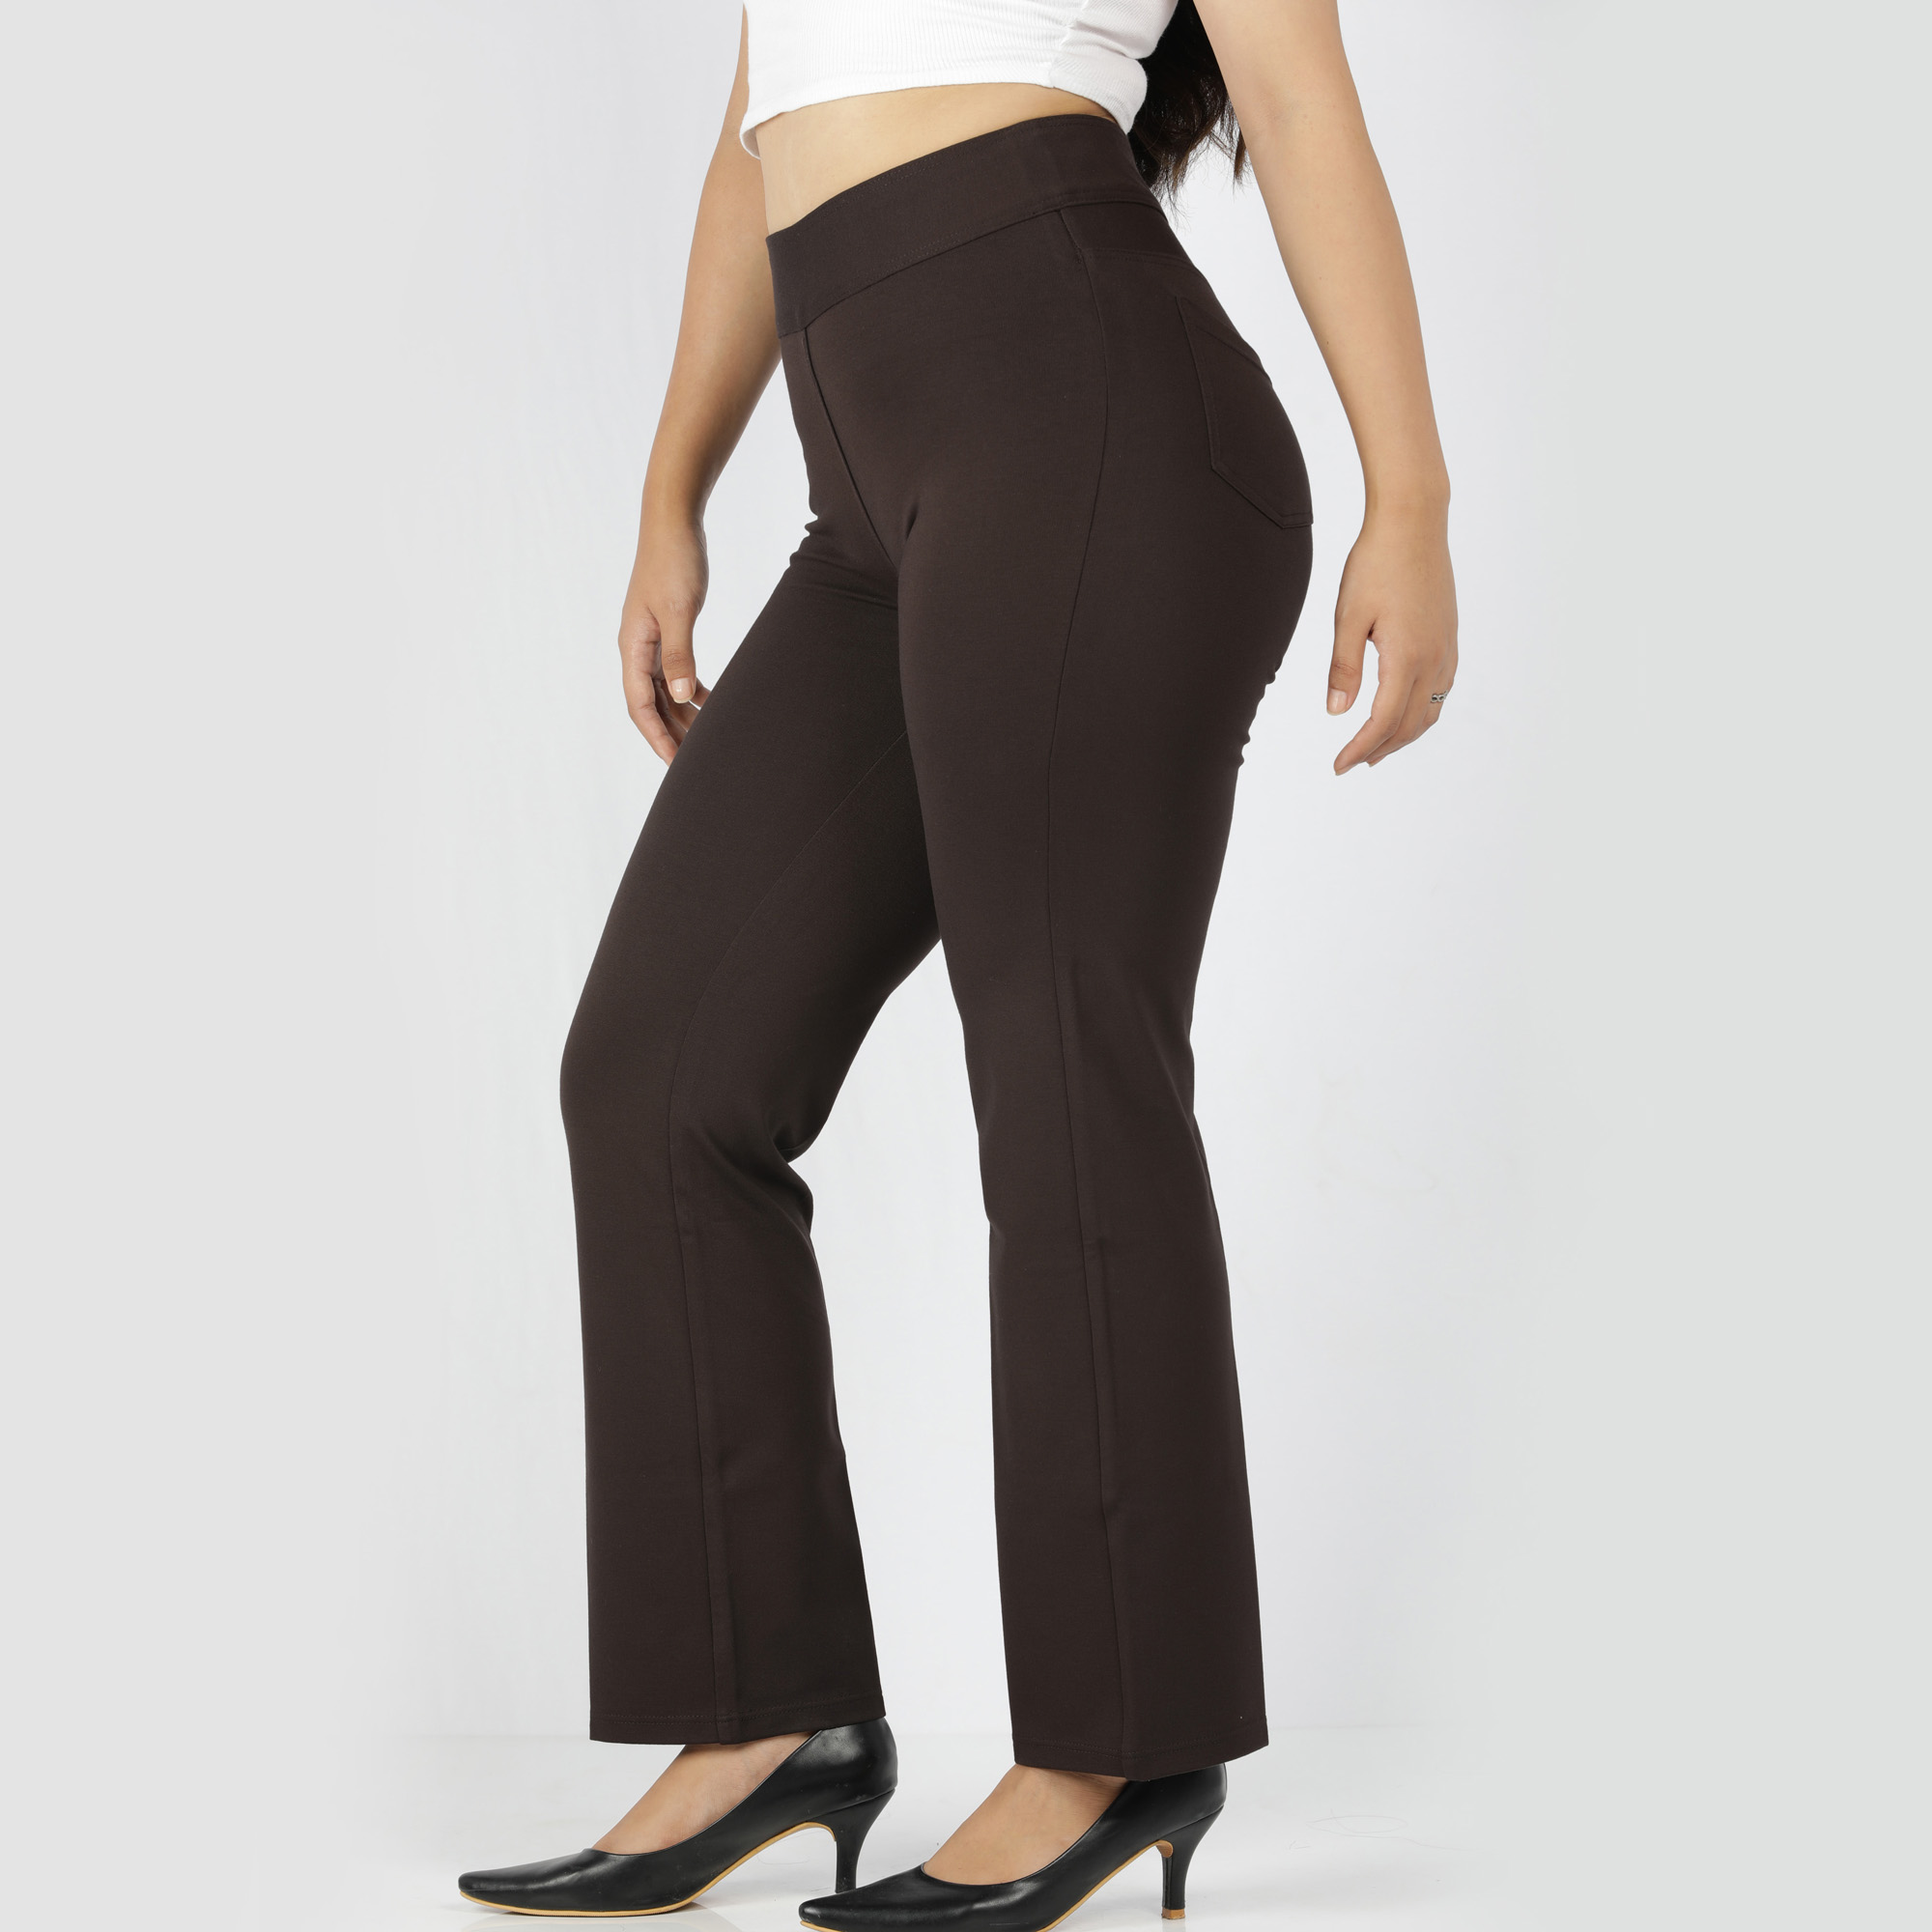 Brown pants for women - Tummy tucker straight leg-2 back pockets - Belore  Slims